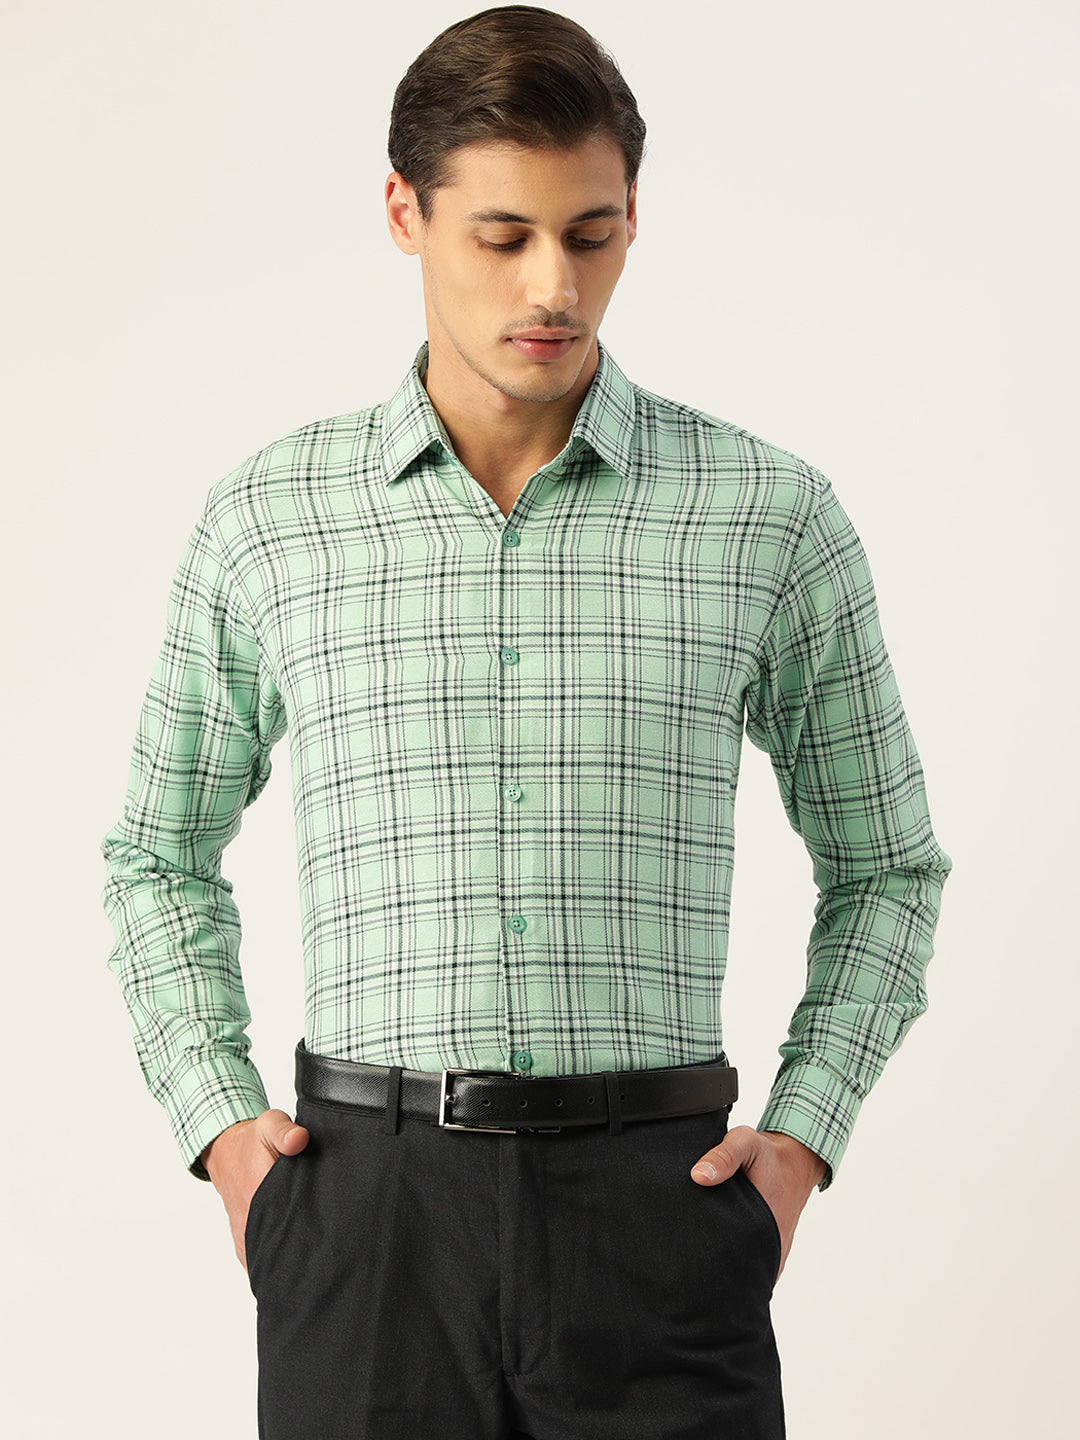 Men's Cotton Checked Formal Shirts ( SF 791Green ) - Jainish